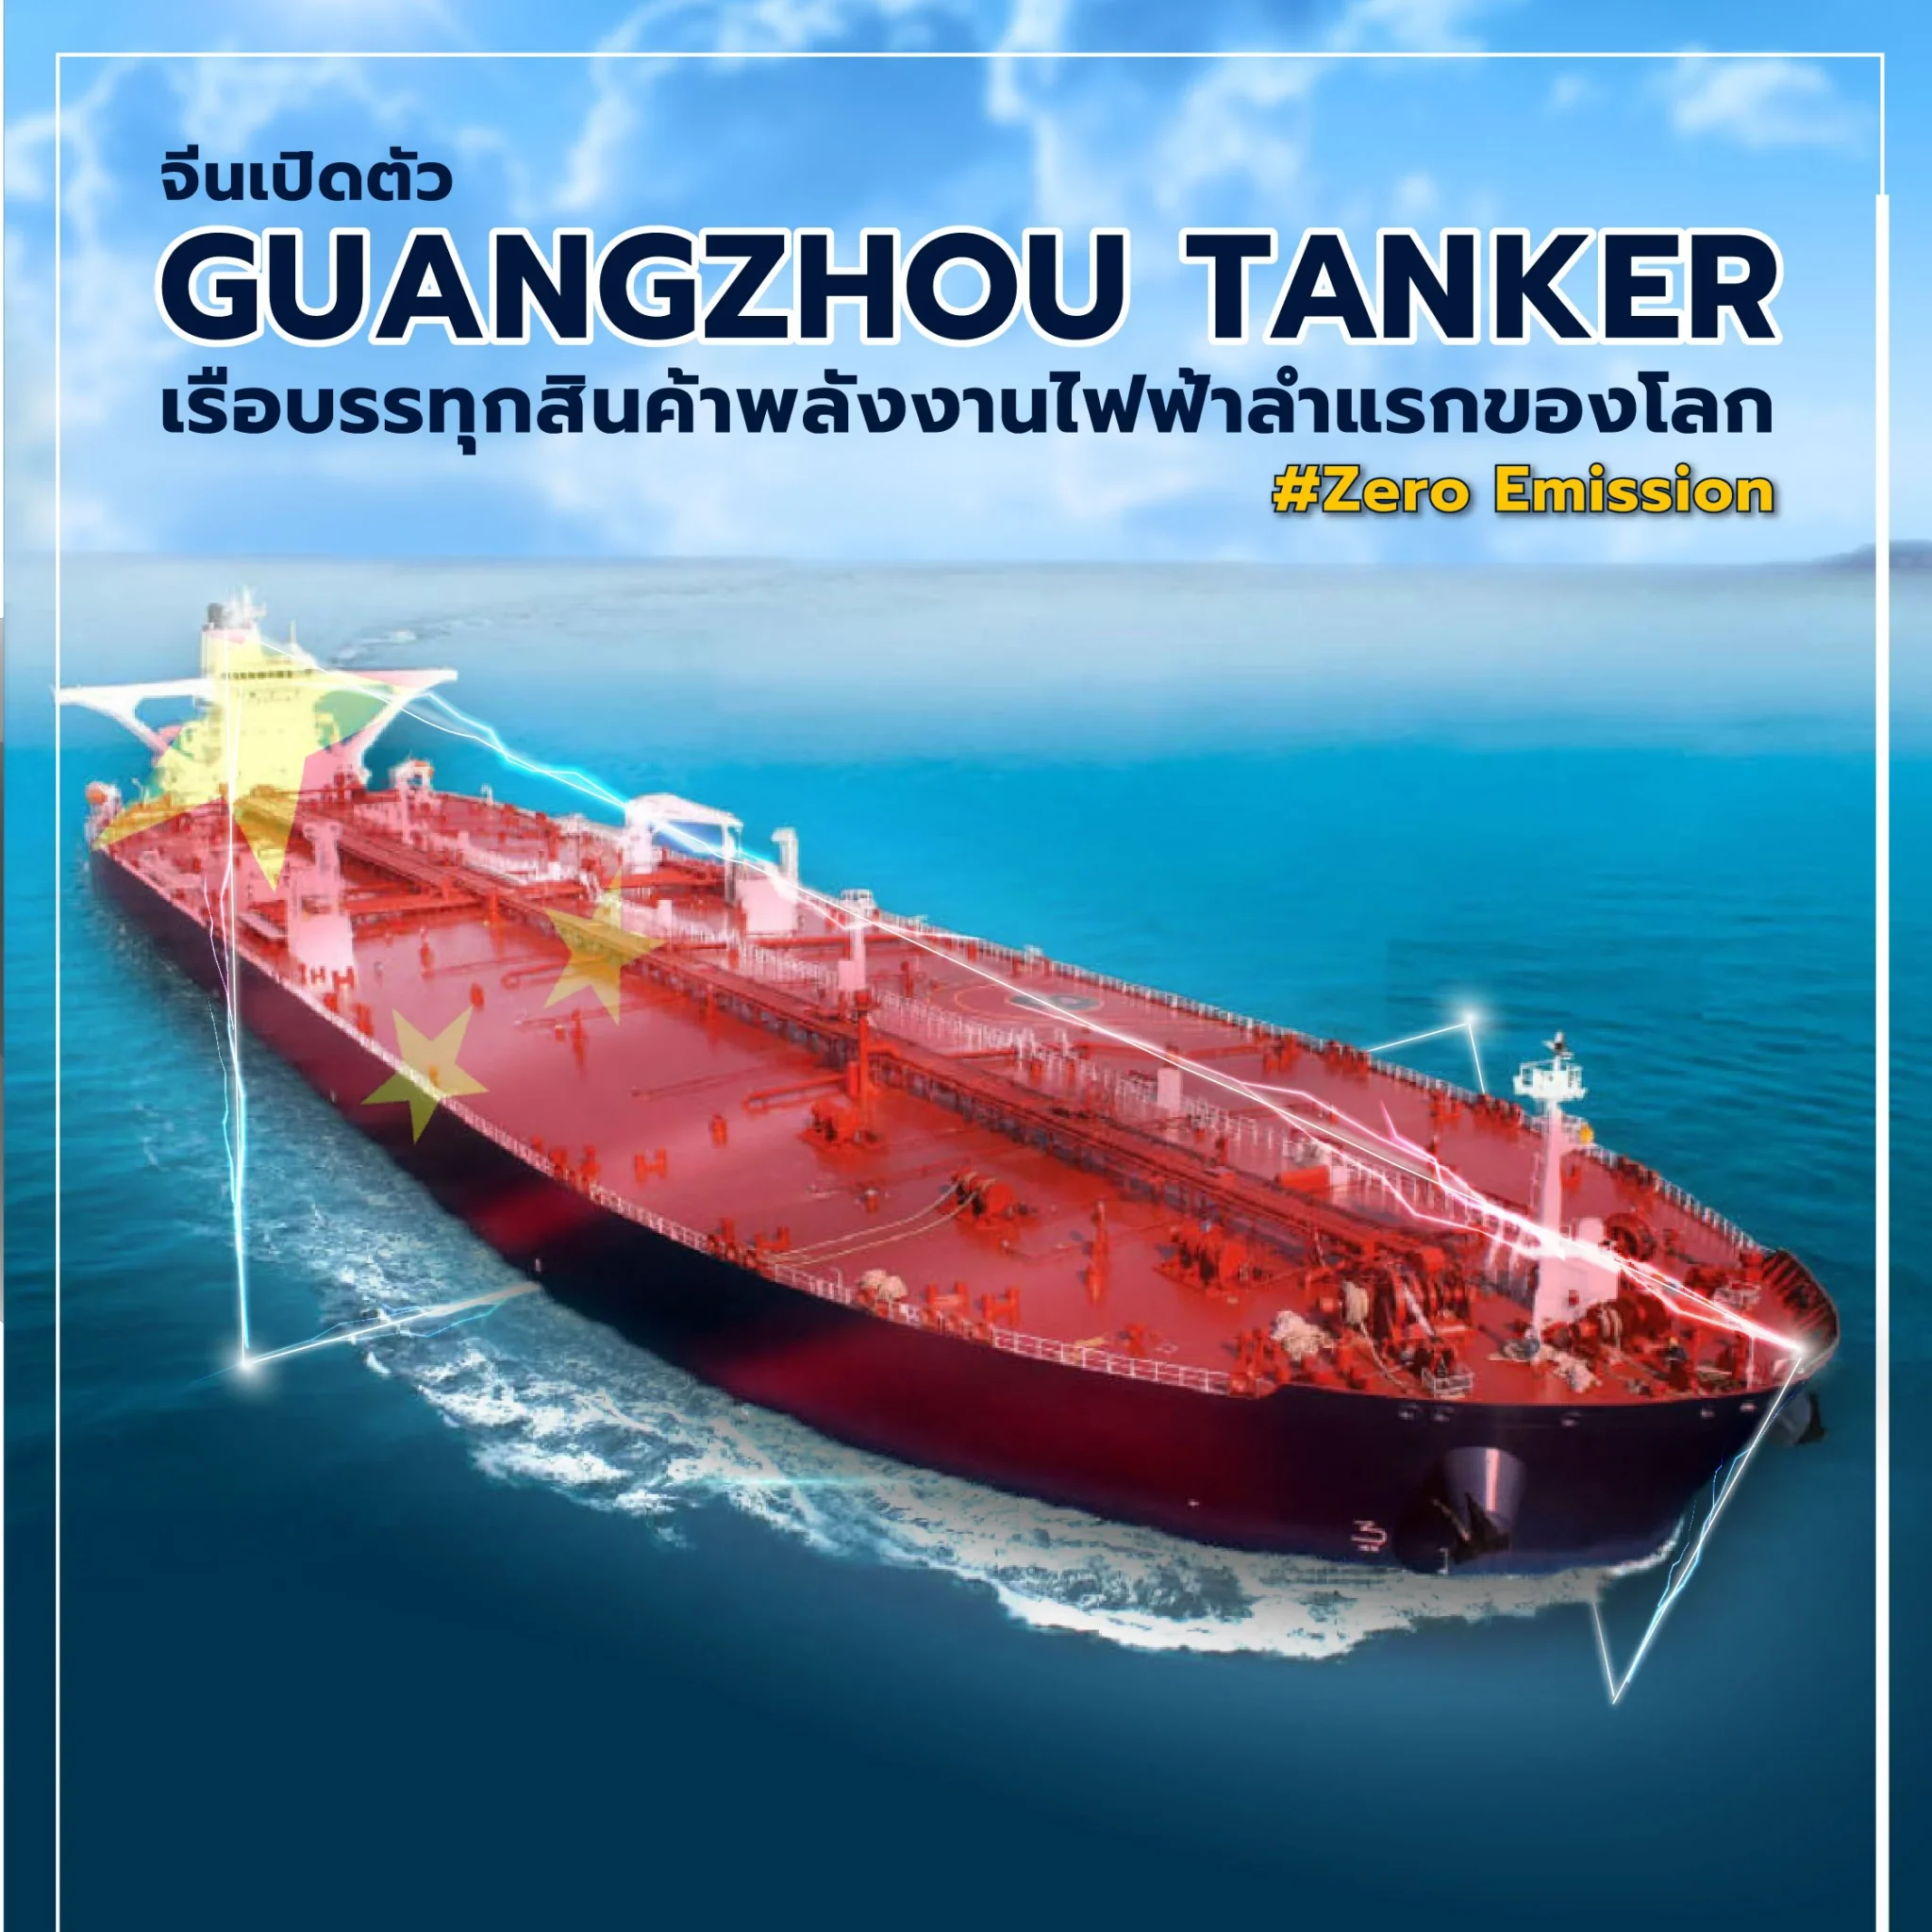 Guangzhou Tanker เรือบรรทุกสินค้าพลังงานไฟฟ้า จาก แดนมังกร